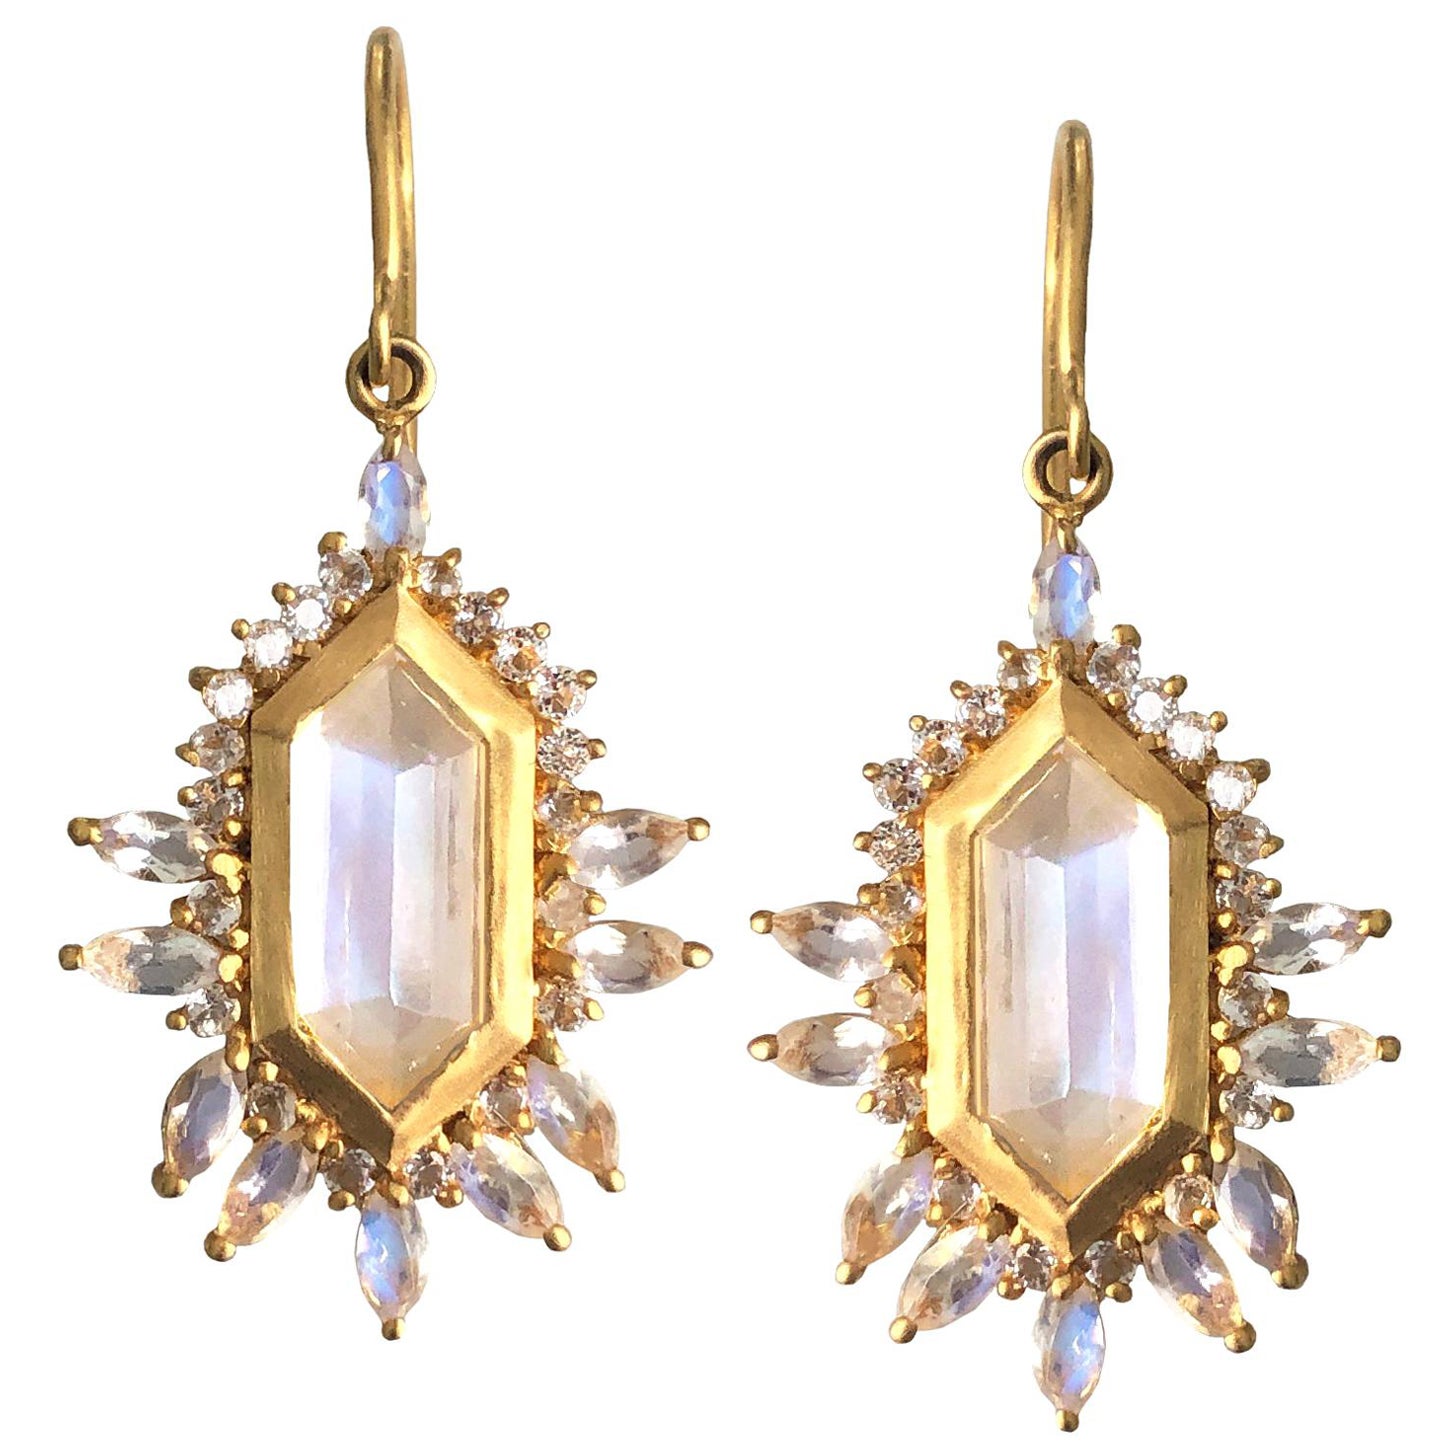 5.65 Carats Rainbow Moonstone Gold Earrings by Lauren Harper